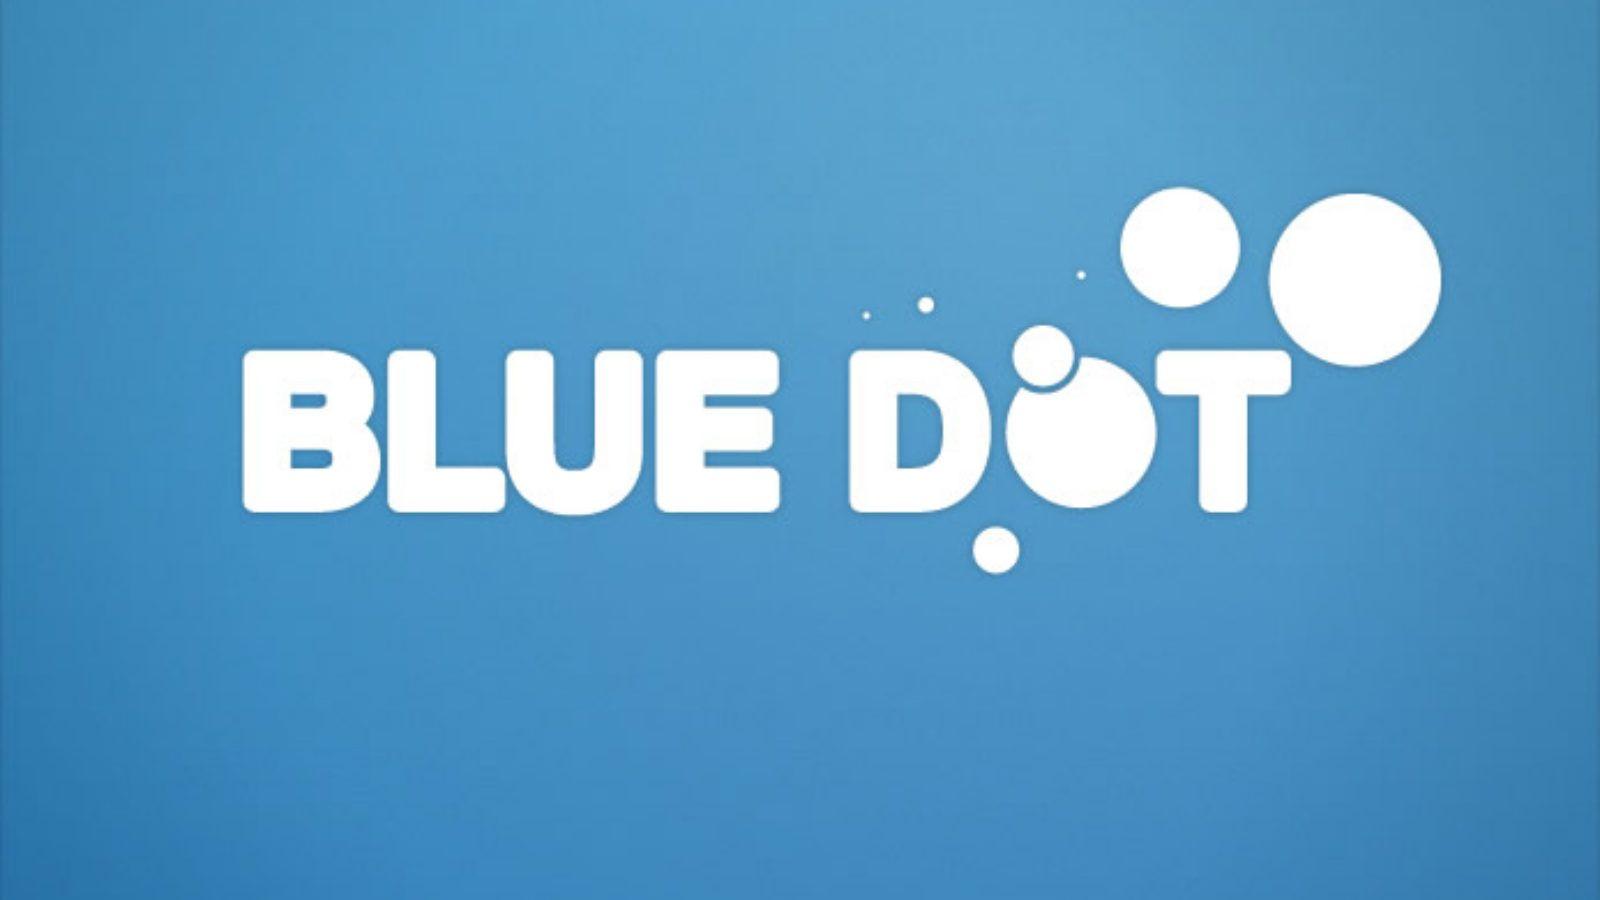 Blue Charity Logo - Blue Dot logo | Logo design | Sane & Able